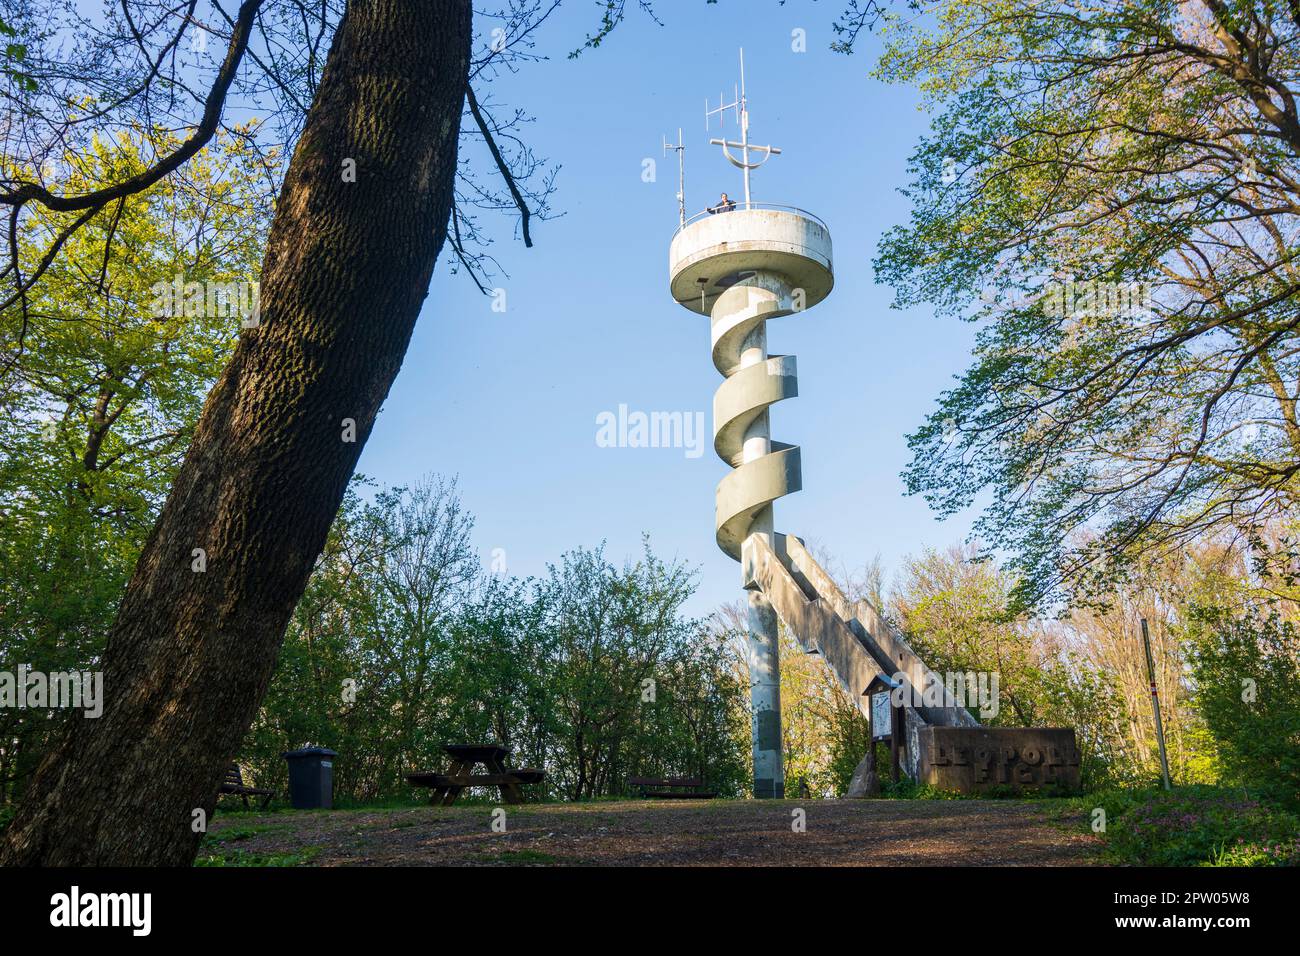 Tulbing: hill Tulbingerkogel, observation tower Leopold-Figl-Warte in Wienerwald, Vienna Woods, Niederösterreich, Lower Austria, Austria Stock Photo